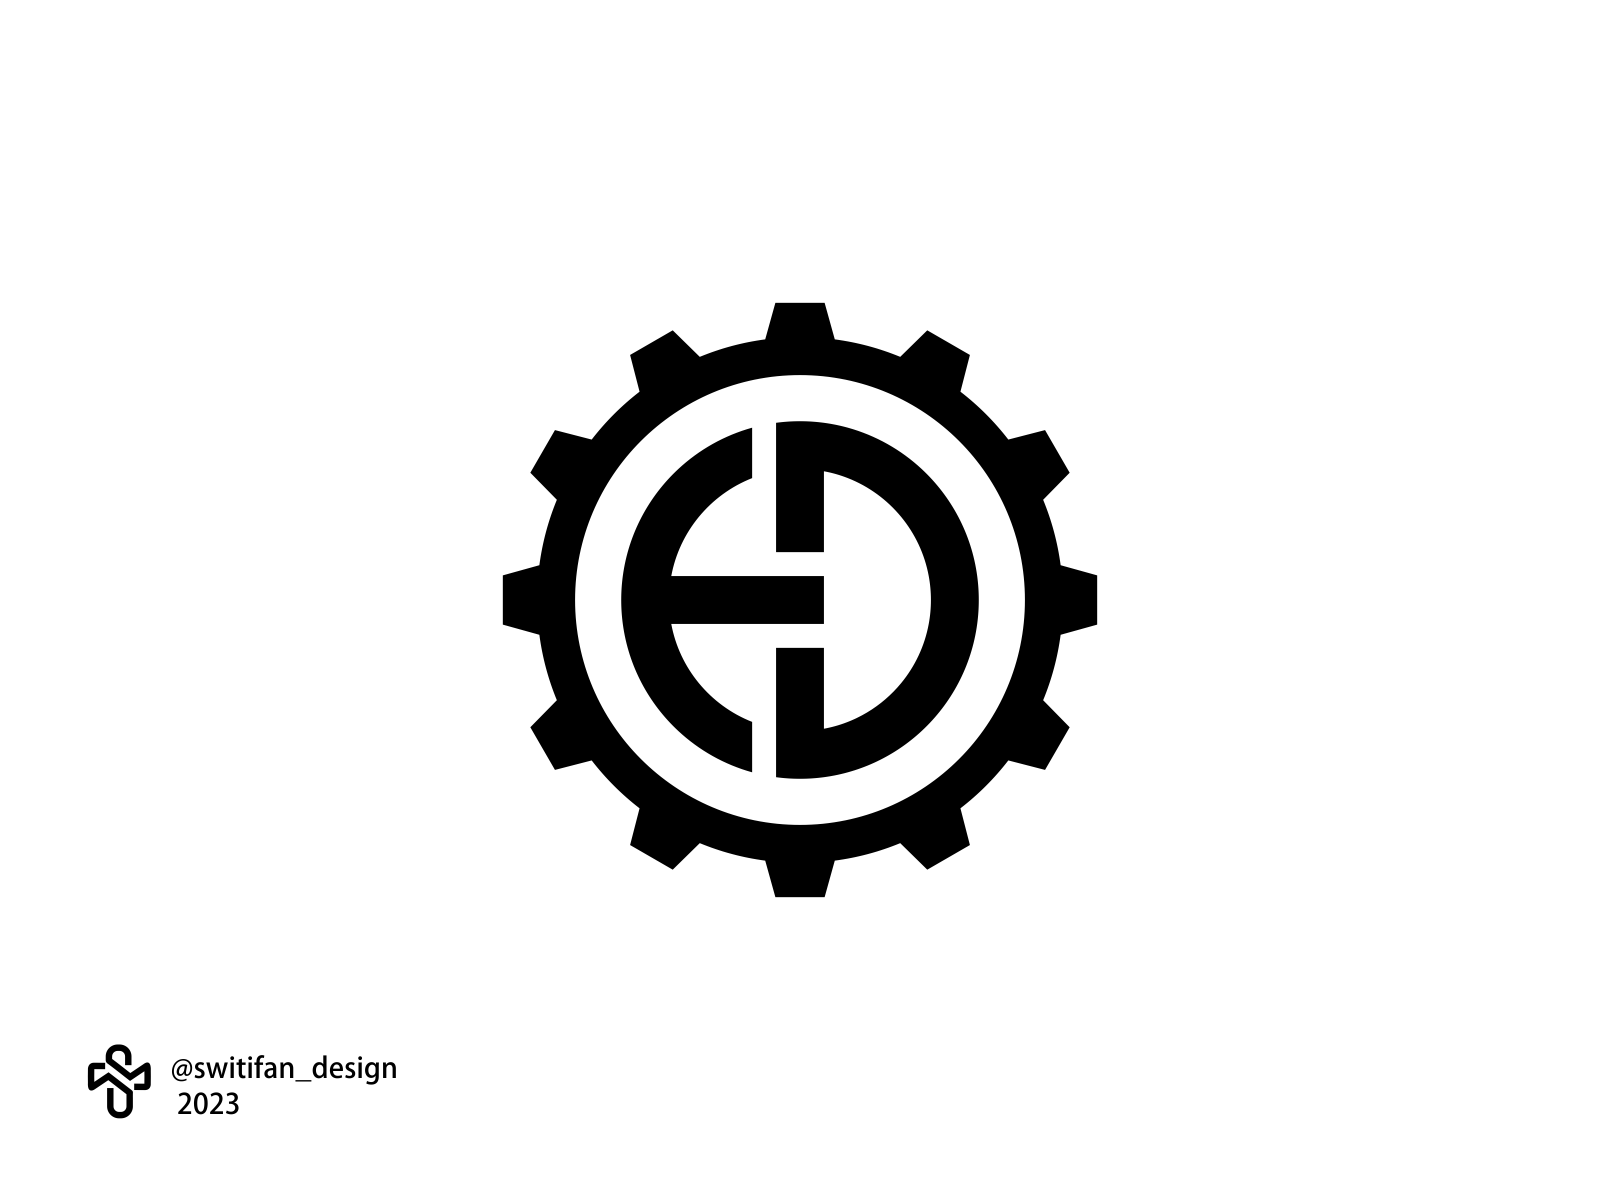 ED logo monogram by switifan design on Dribbble